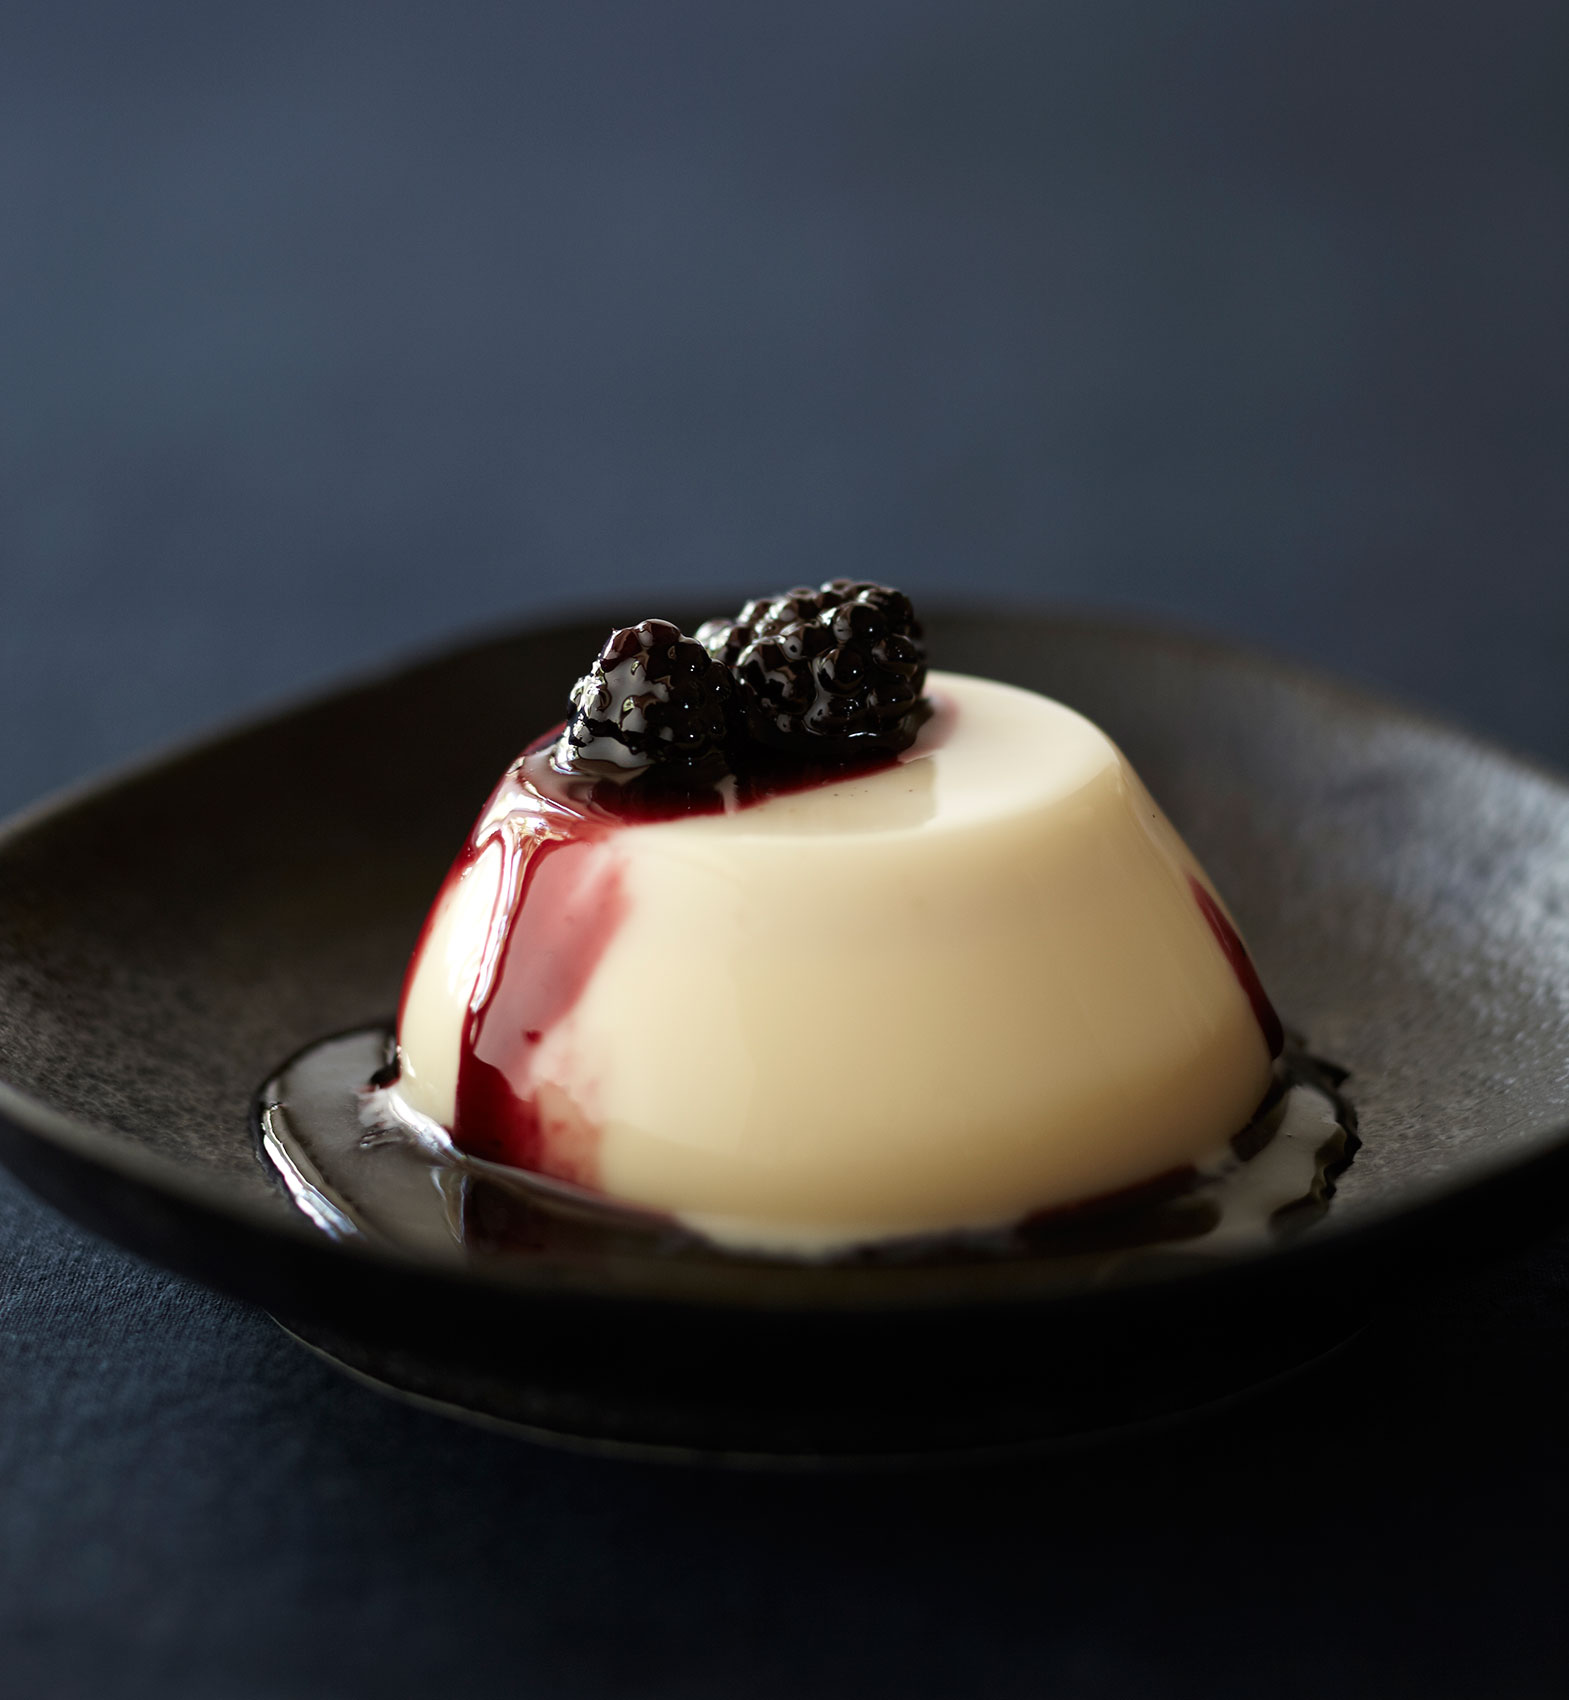 Everyday • Panna Cotta with Fresh Blackberries on Dark Ceramic Dish • Hospitality & Editorial Food Photography